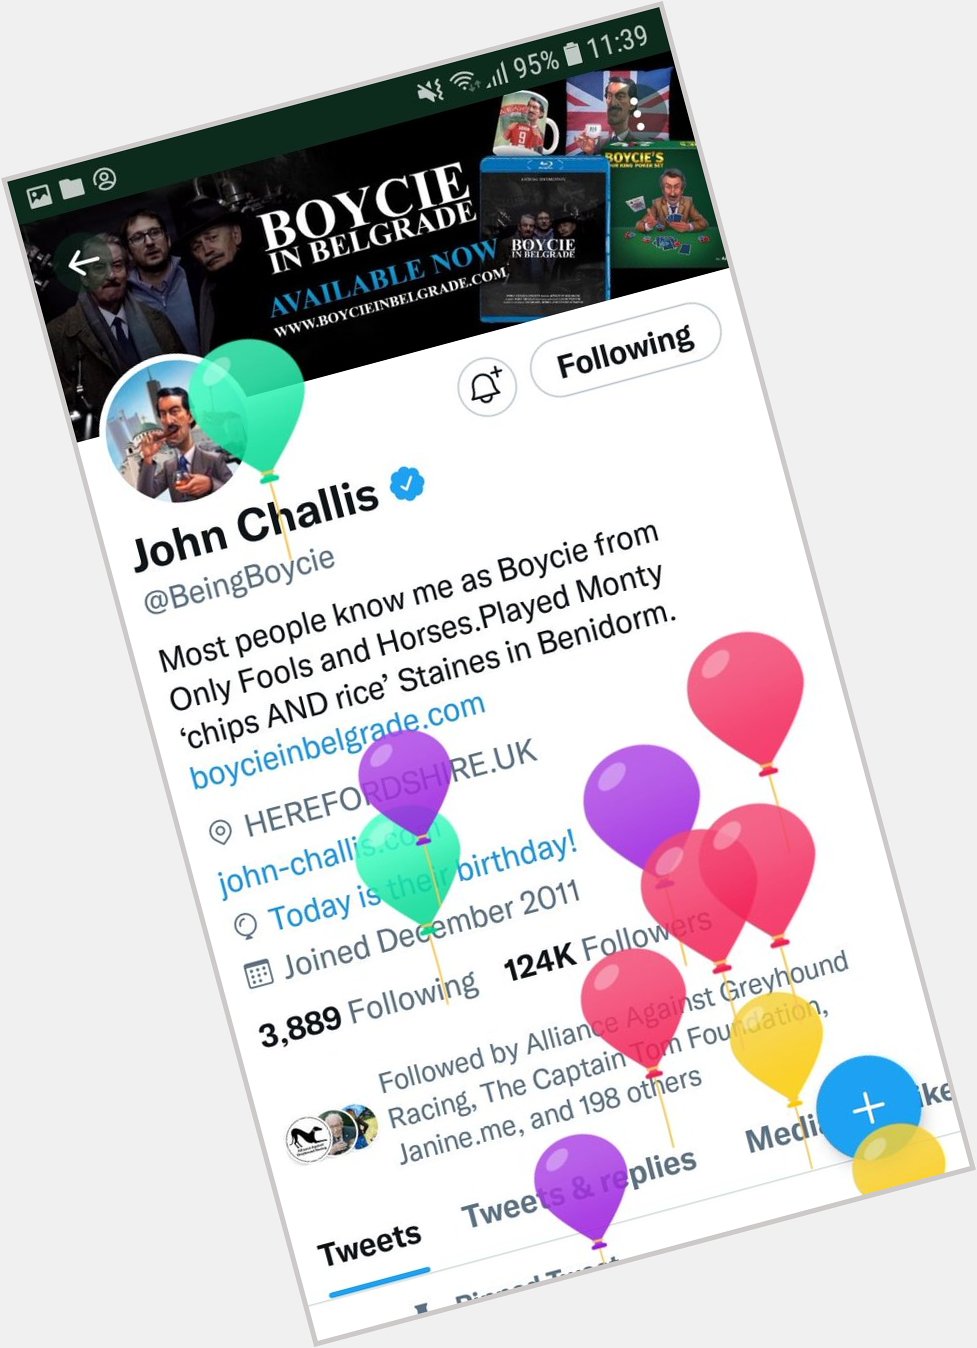  Happy Birthday John Challis!        